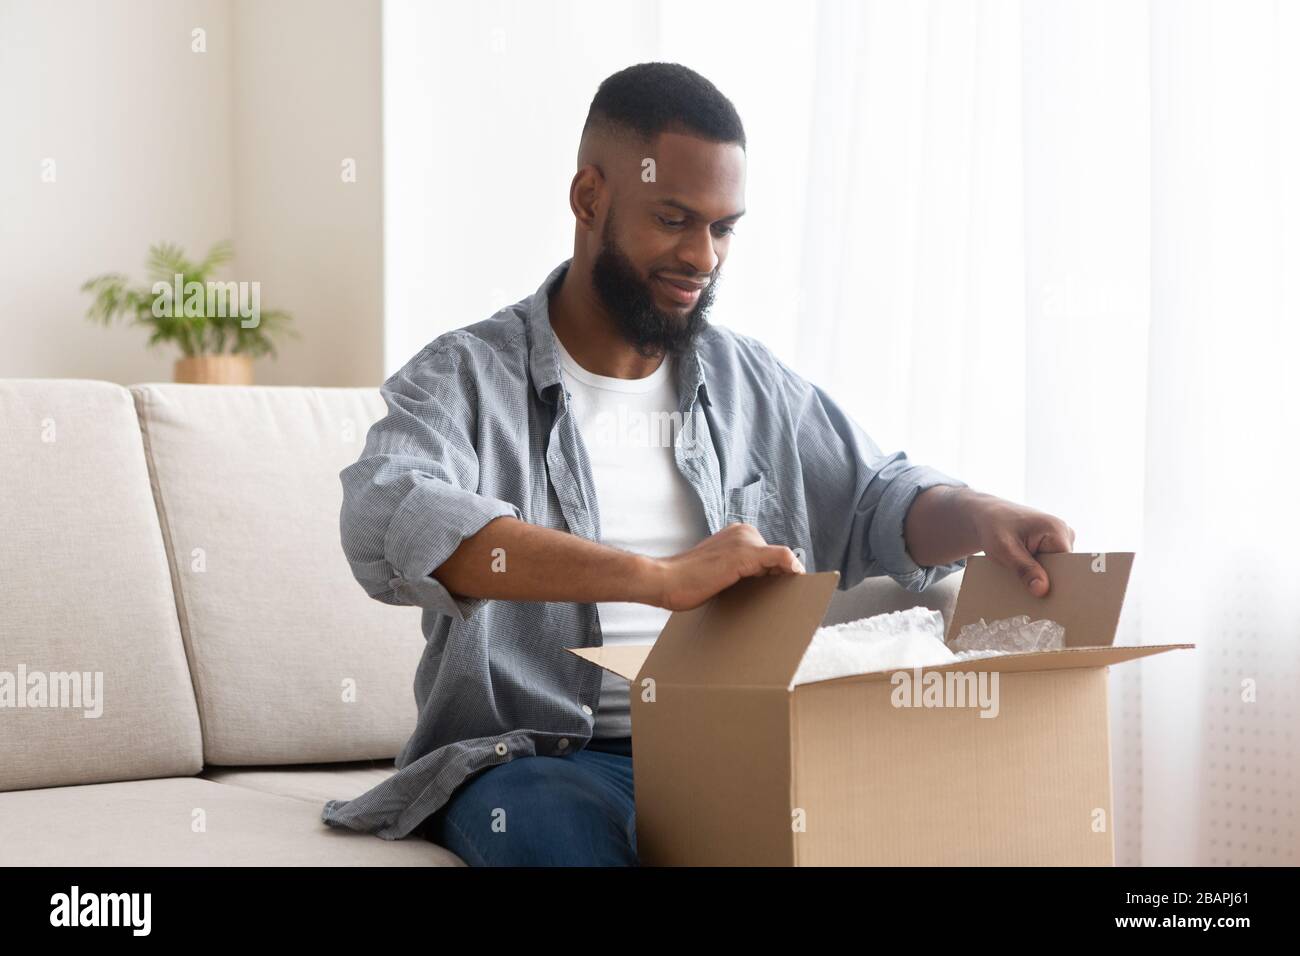 Male buyer unpack cardboard box at home Stock Photo